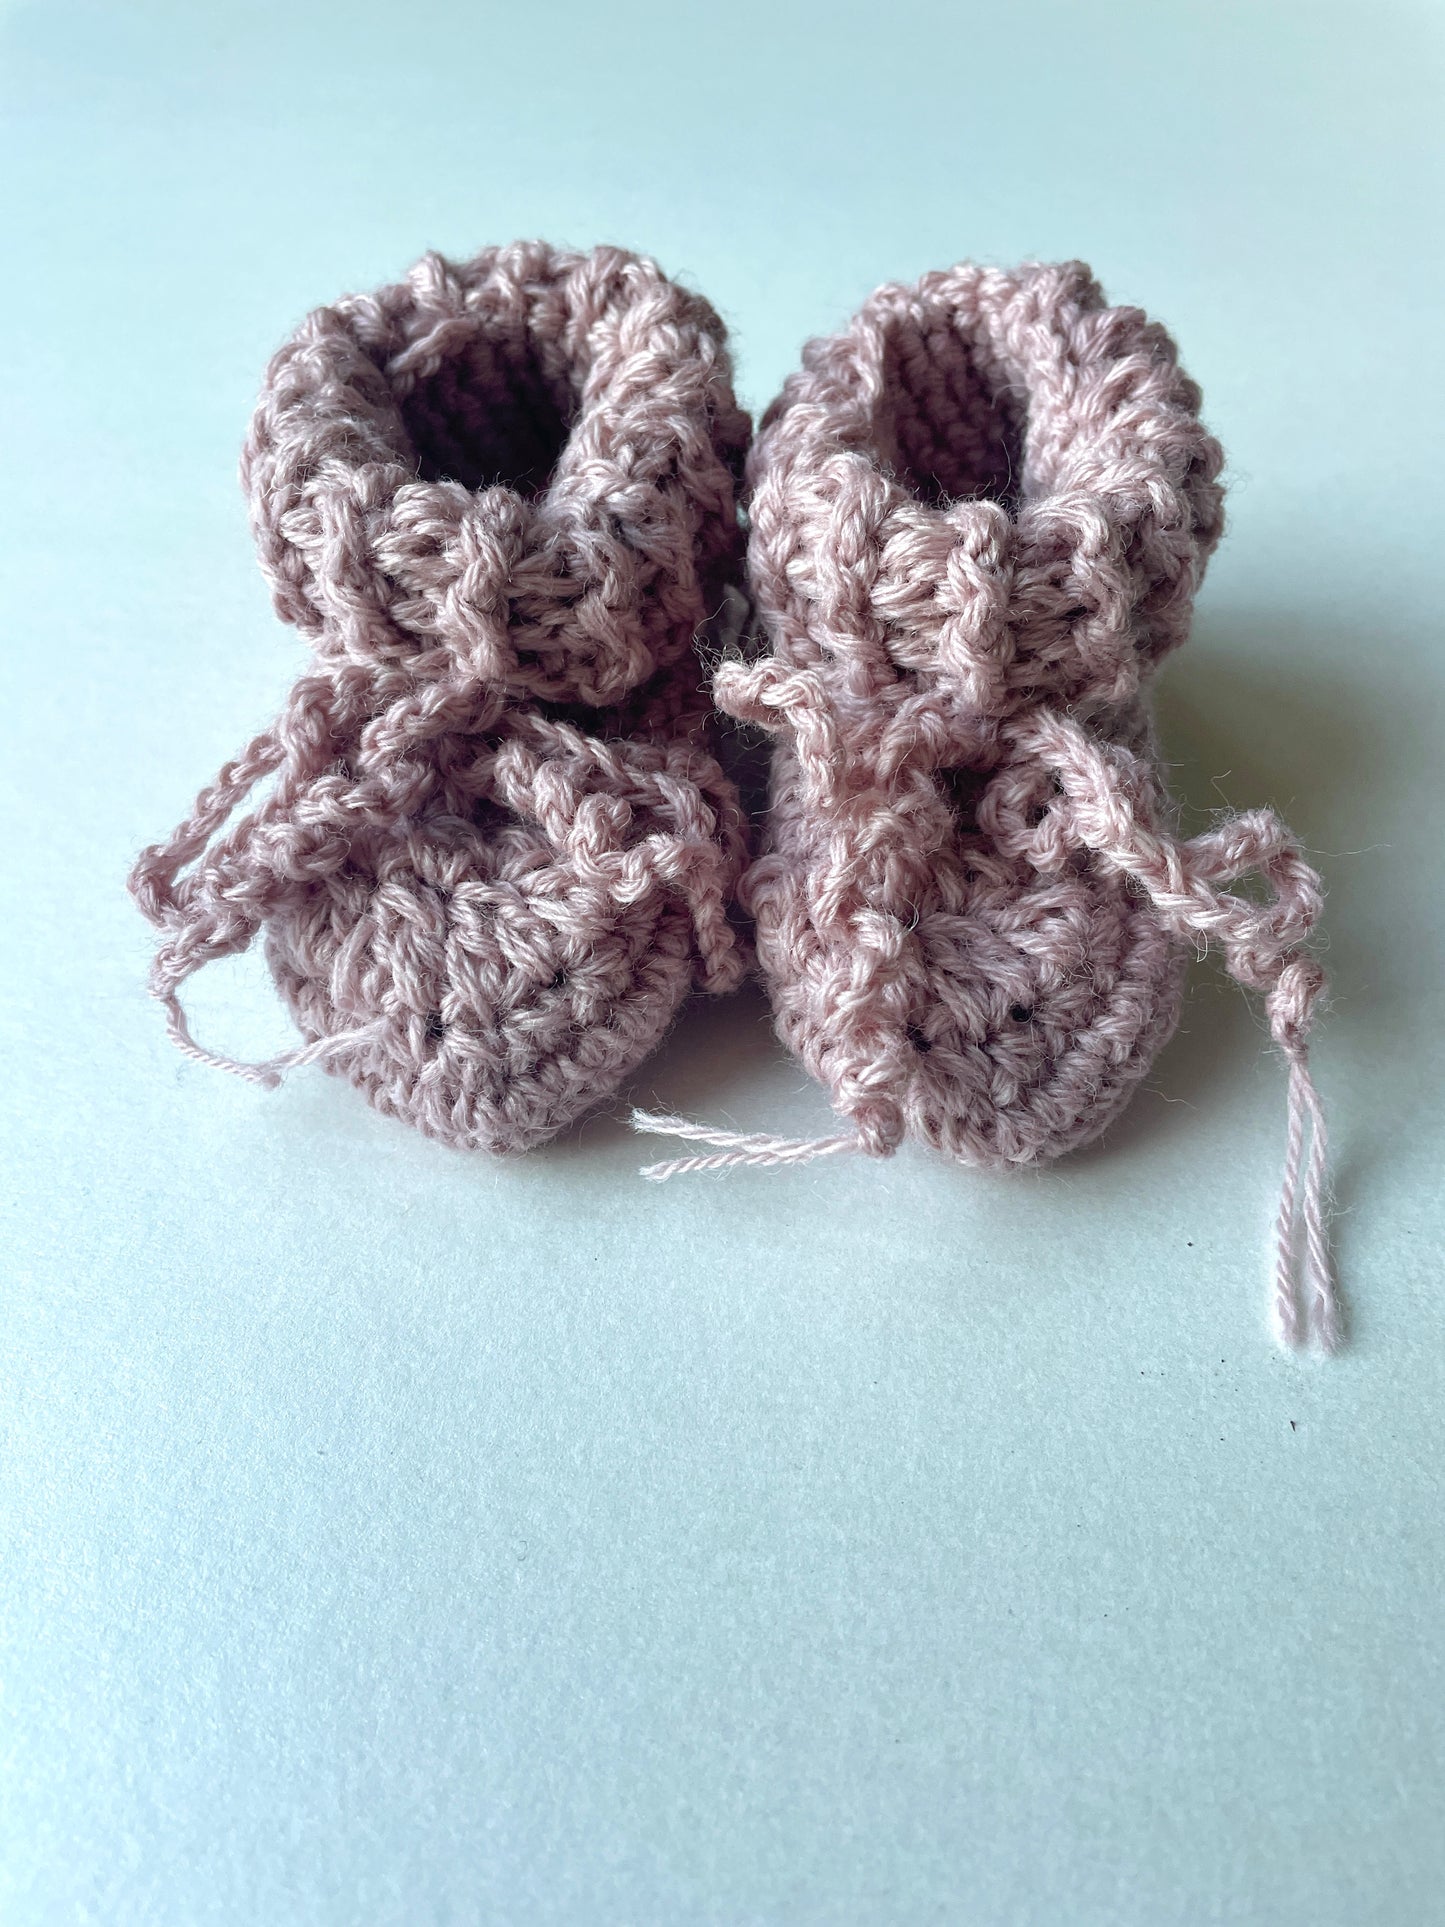 Wool baby booties